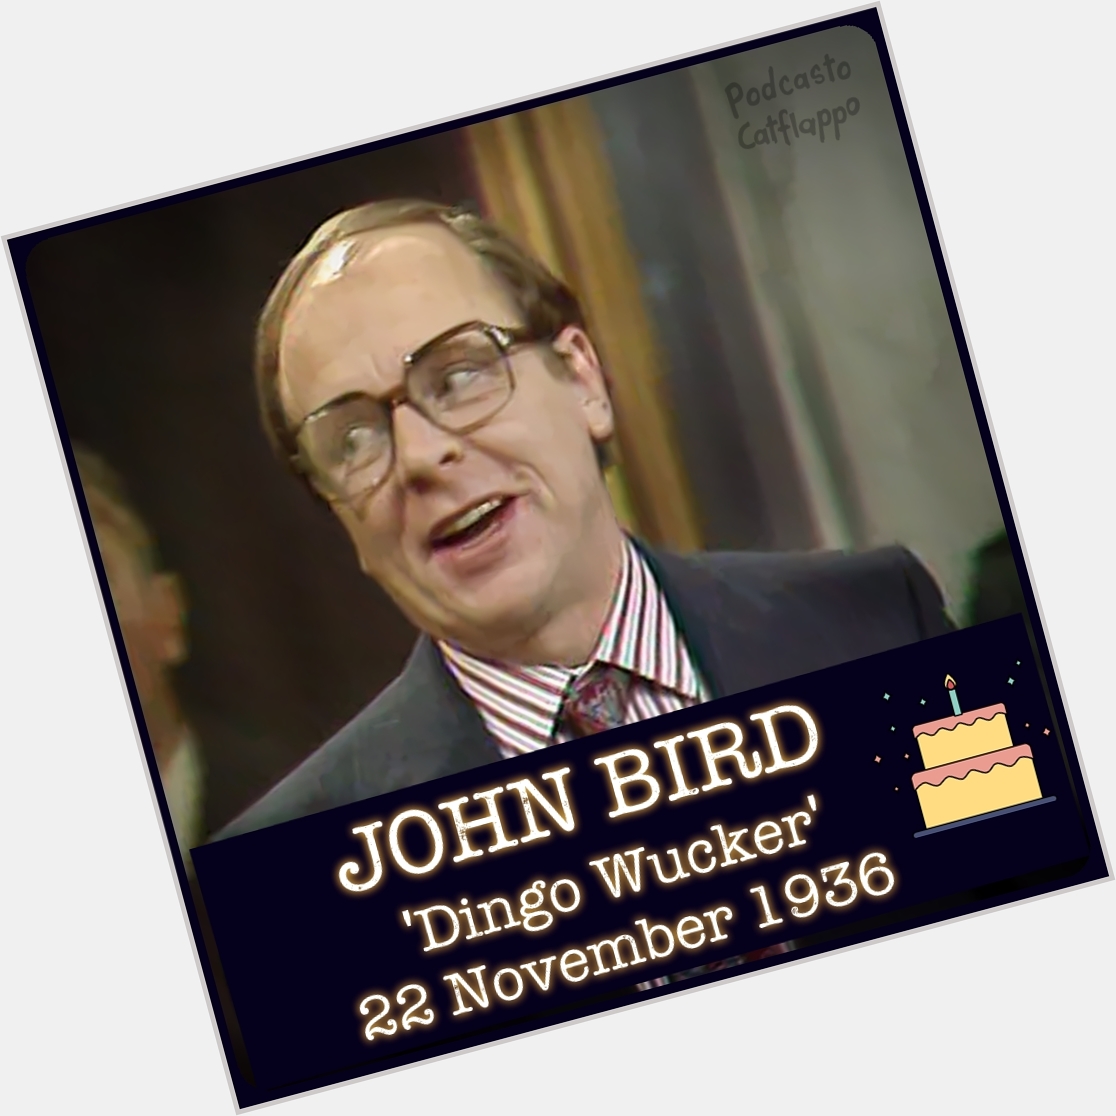 Happy Birthday Dingo Wucker!
The great John Bird, always highly watchable 